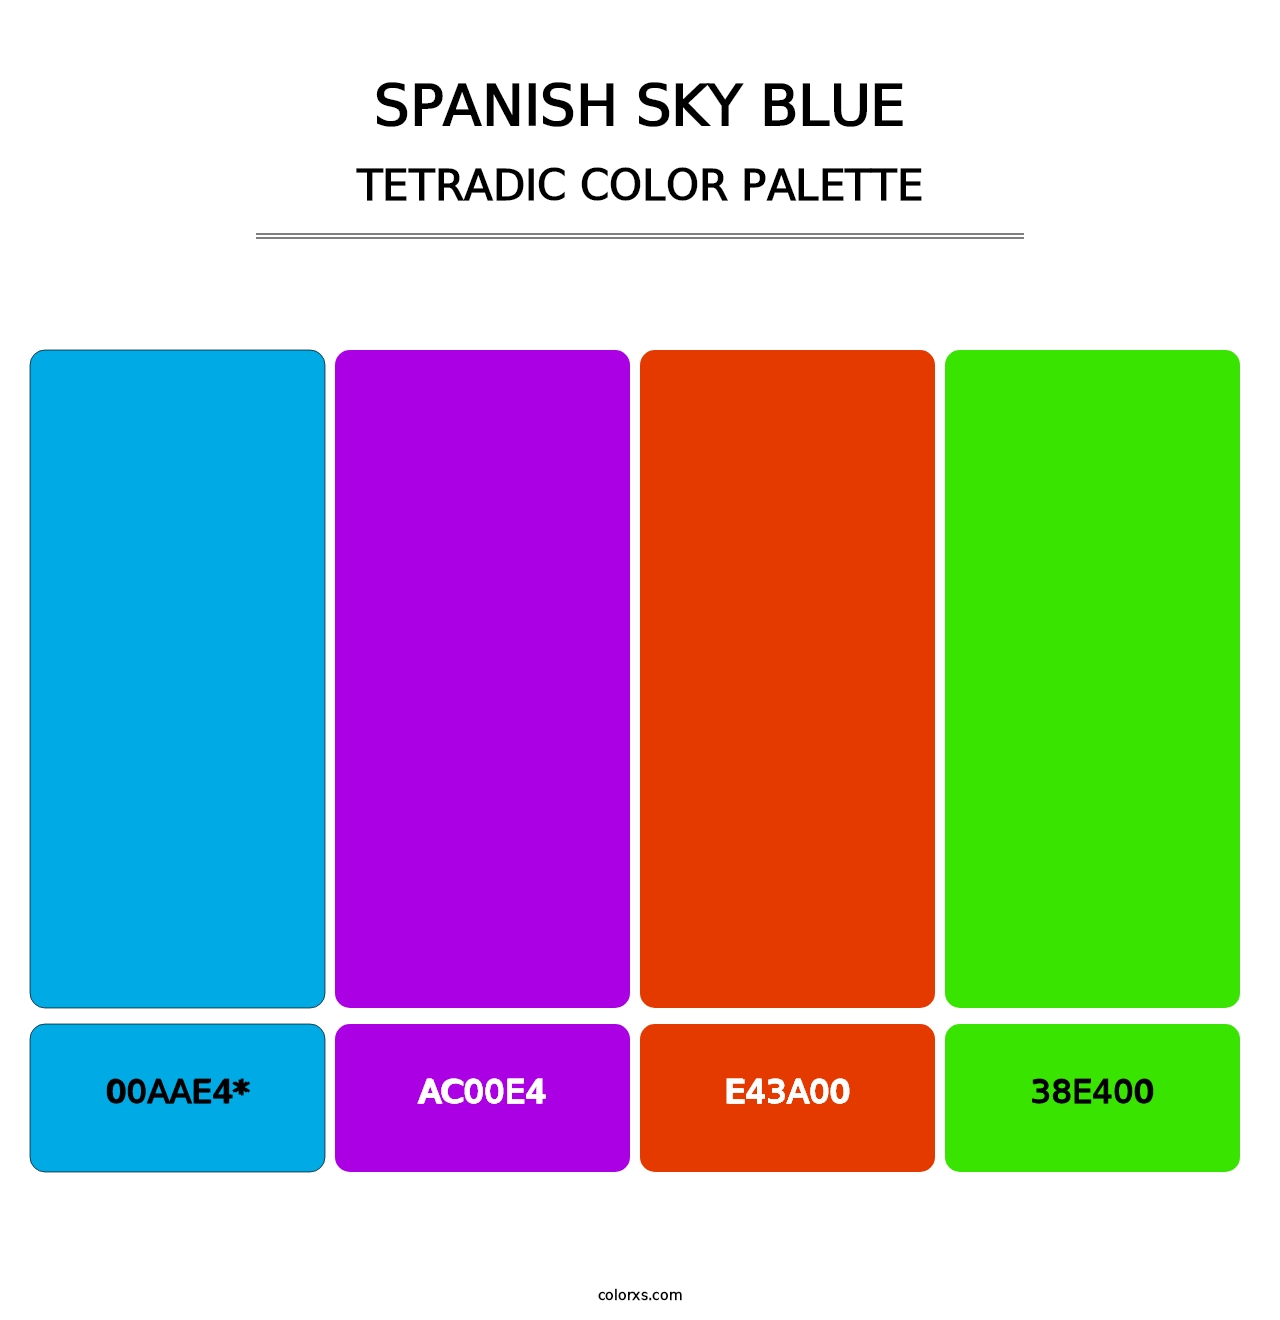 Spanish Sky Blue - Tetradic Color Palette